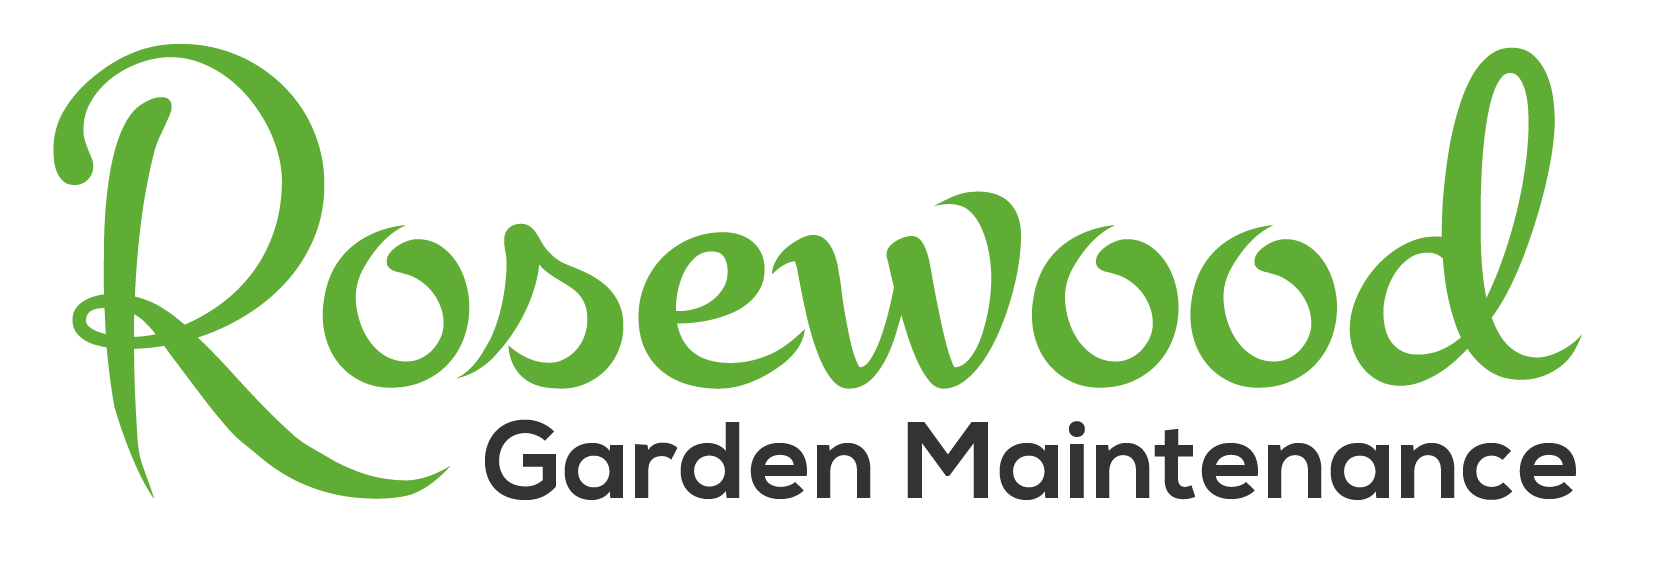 Rosewood Garden Maintenance Services